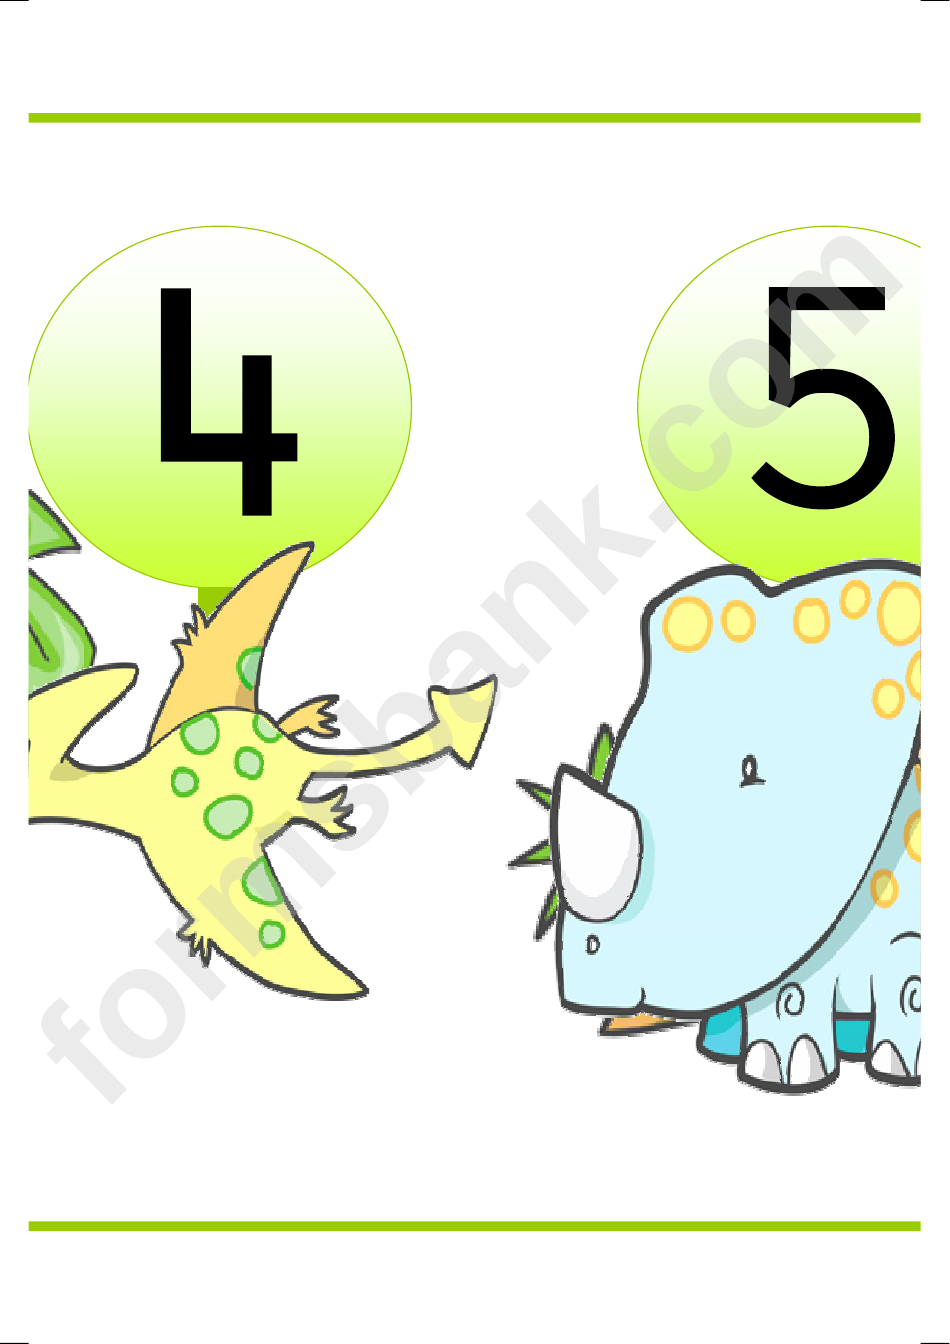 Dinosaur Number Banner (1-10) Template